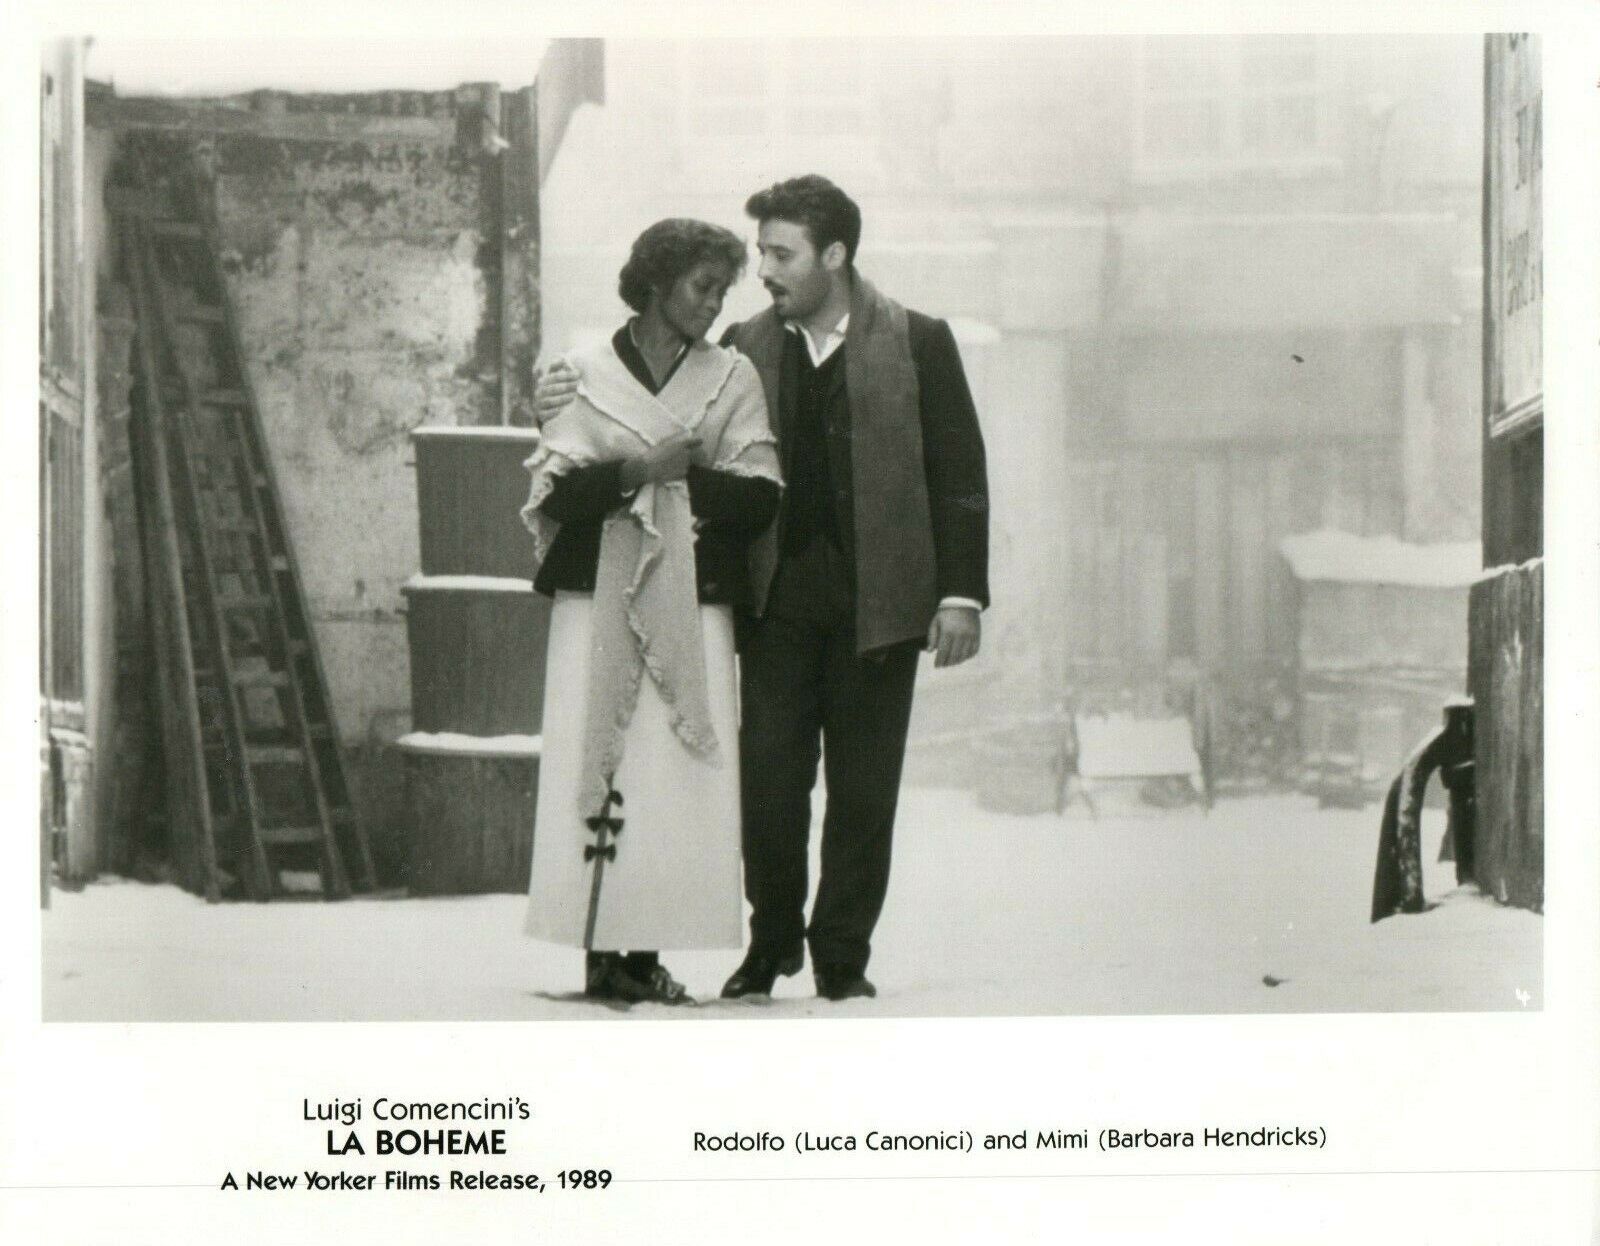 LUCA CANONICI BARBARA HENDRICKS LA BOHEME Movie 8x10 Promo Press Photo Poster painting 1989